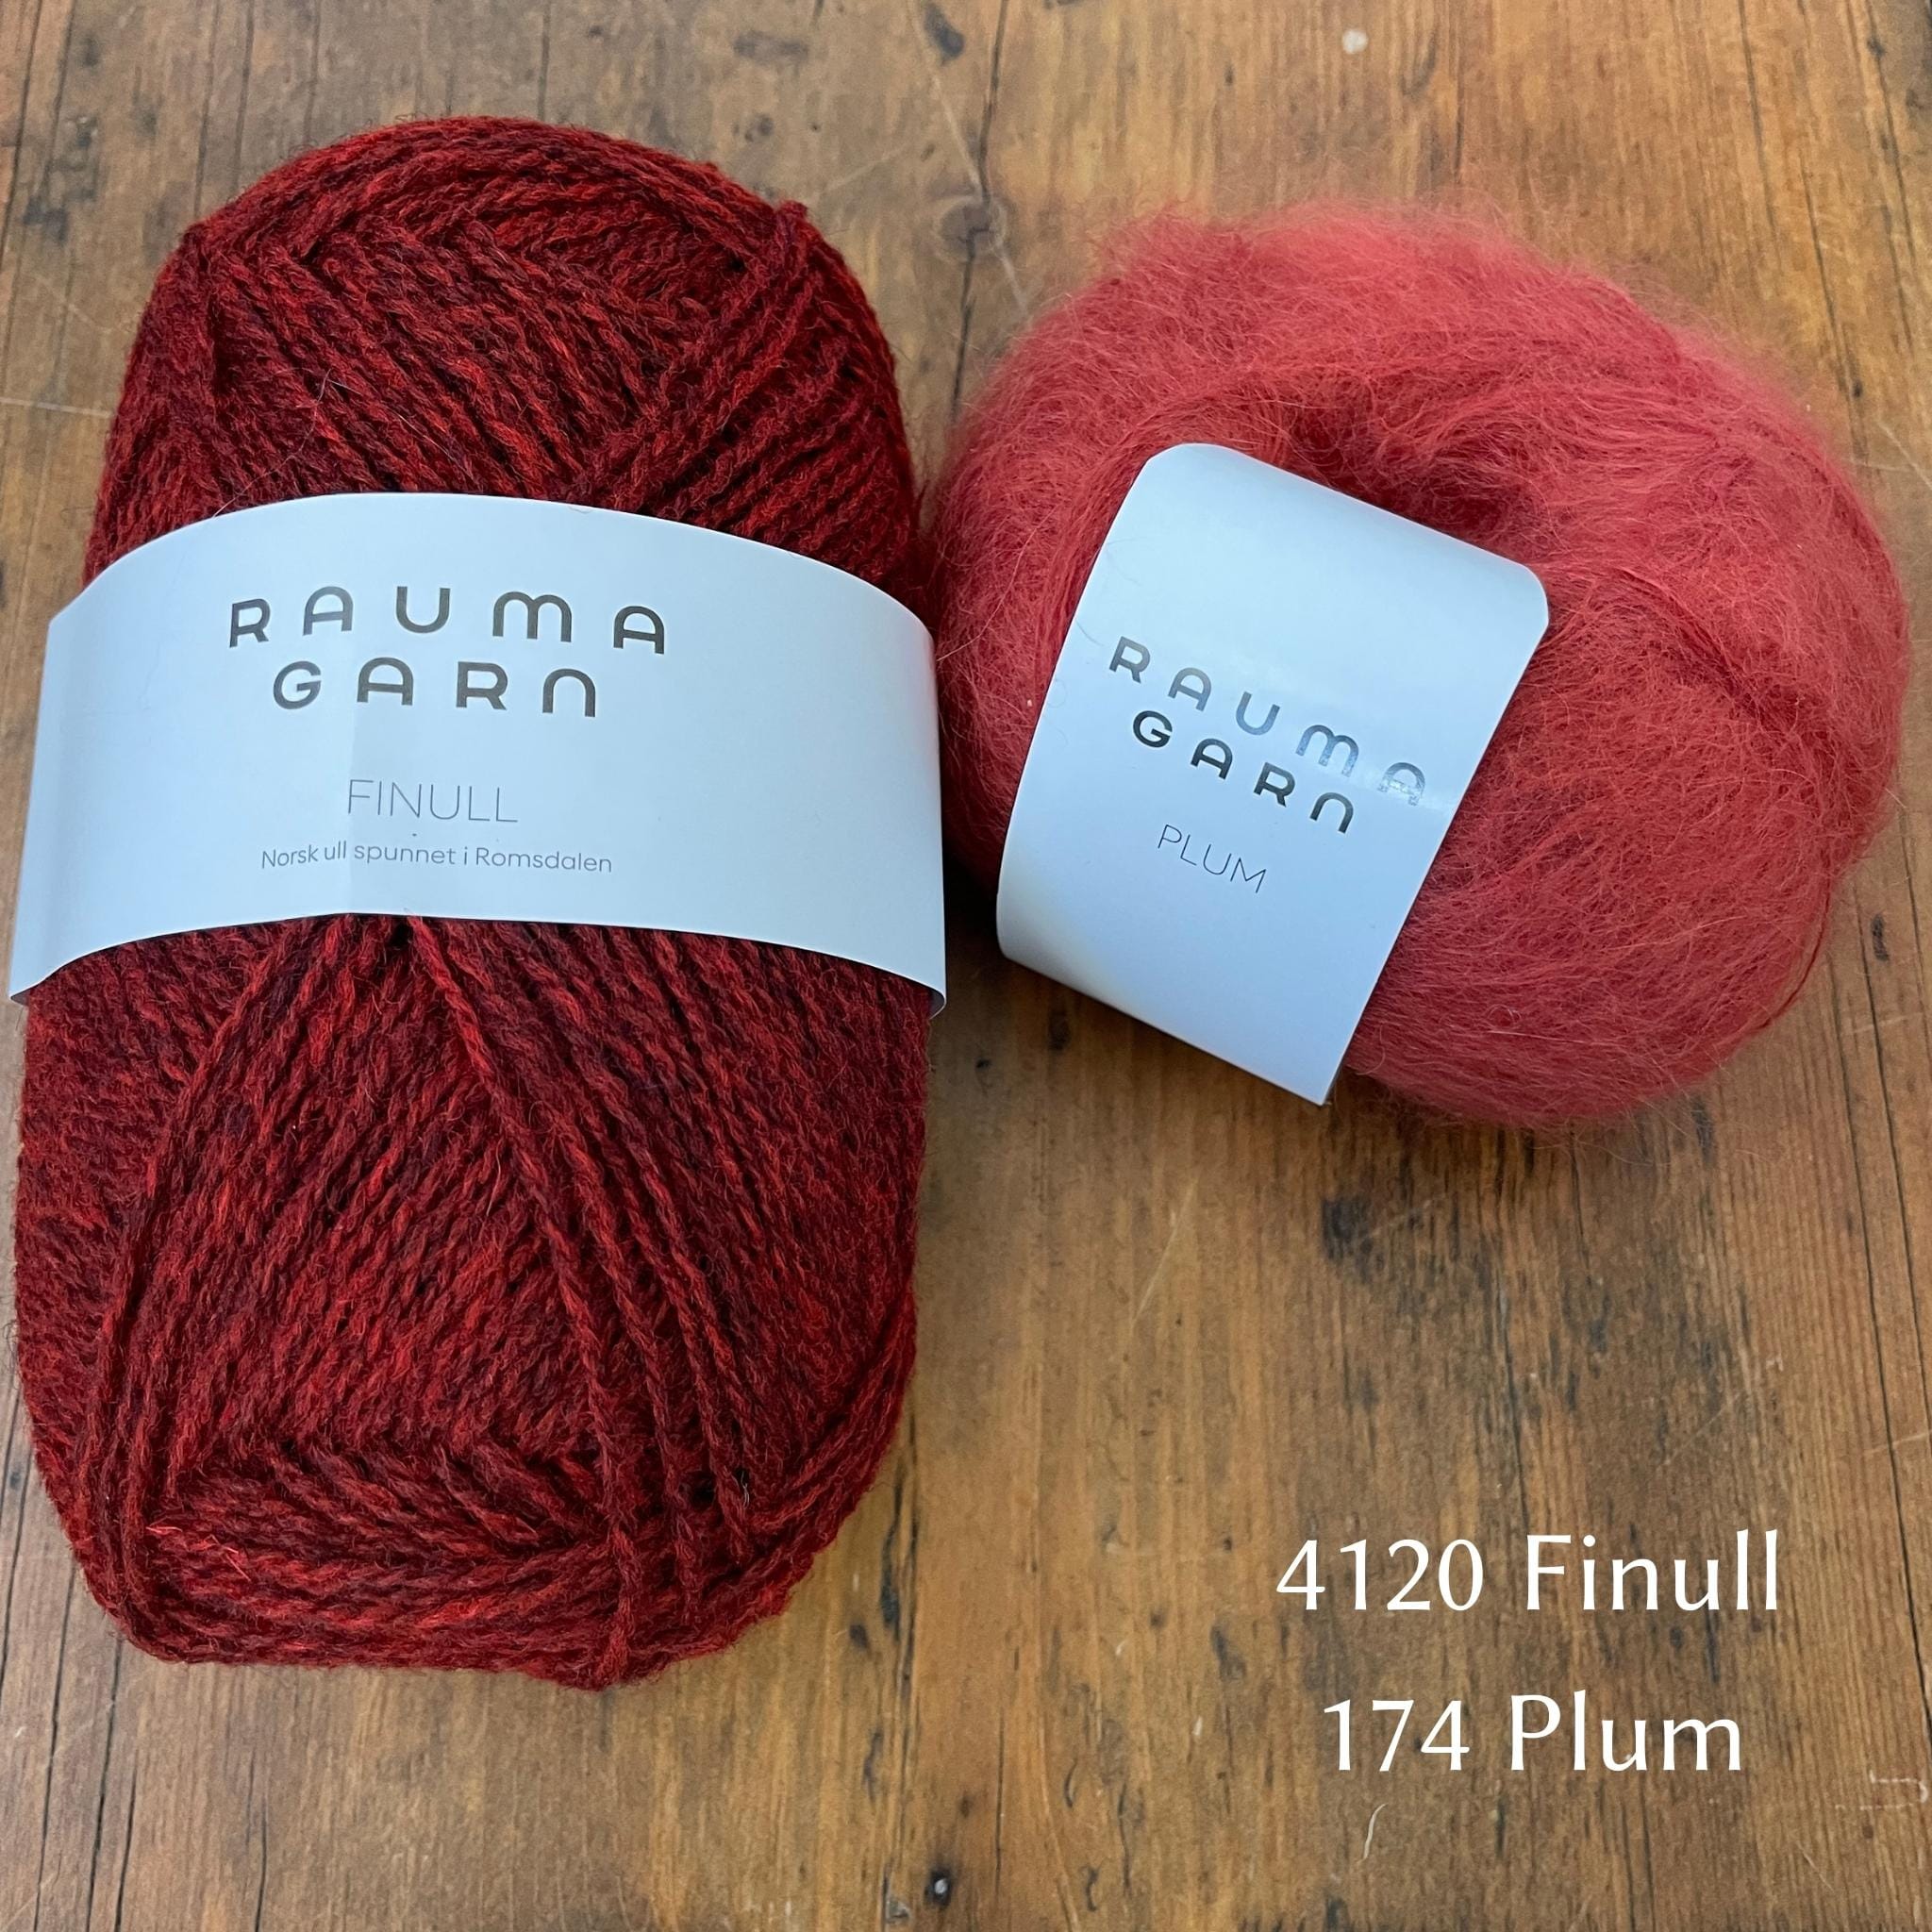 Rauma Finullgarn yarn in heathered red with coordinating Plum yarn 